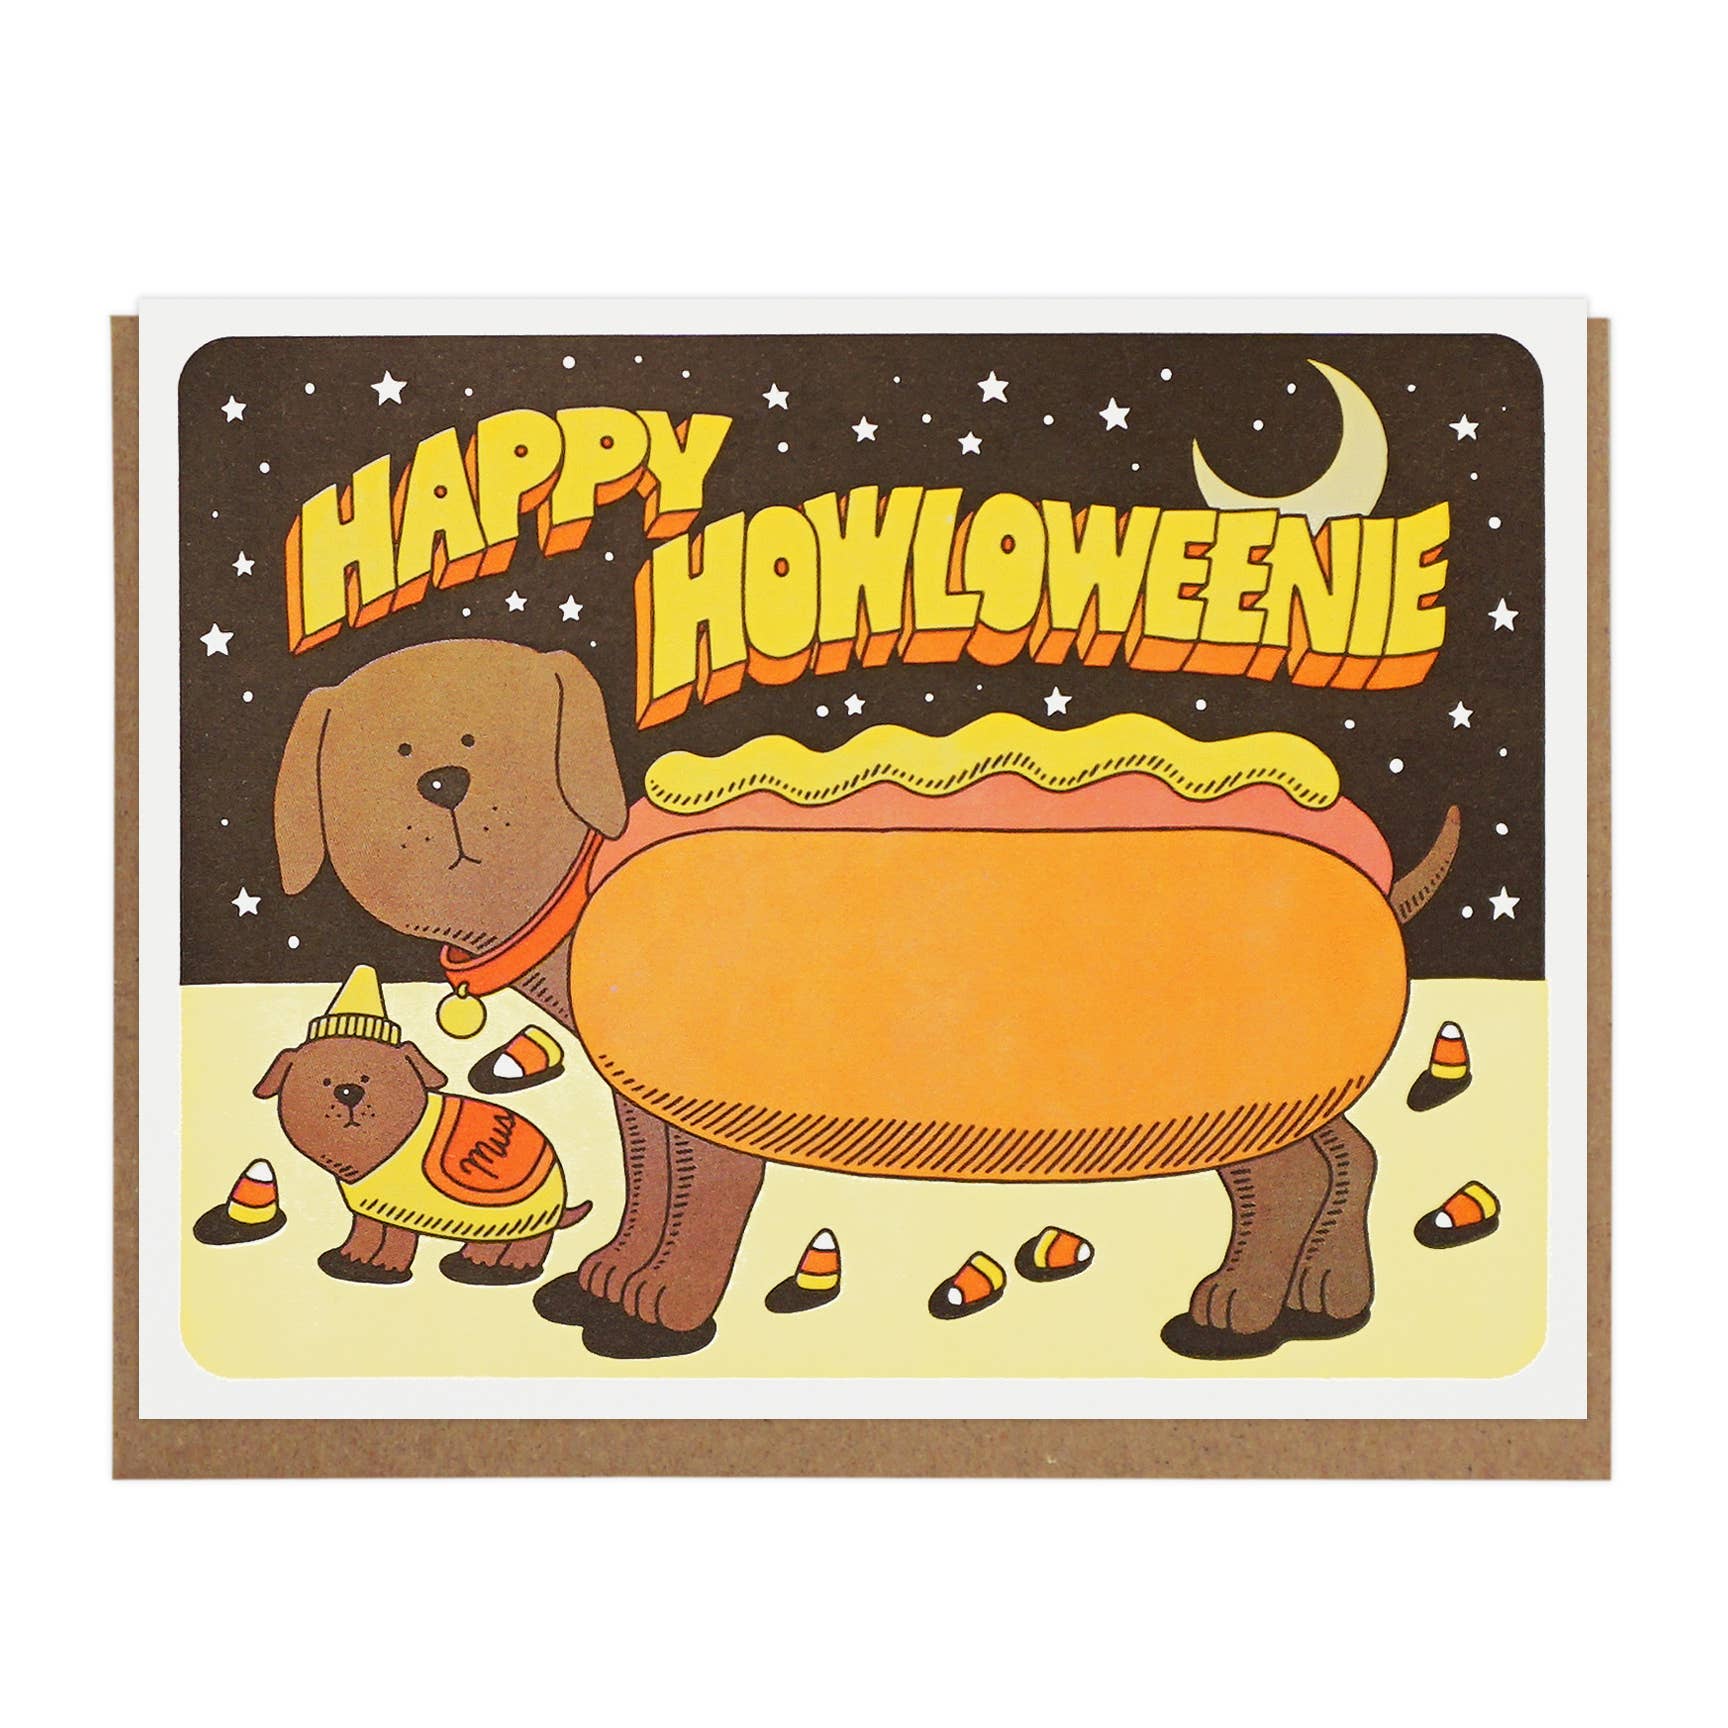 Halloween greeting card -- image of dog inside a hot dog bun and reads "Happy Howloweenie"